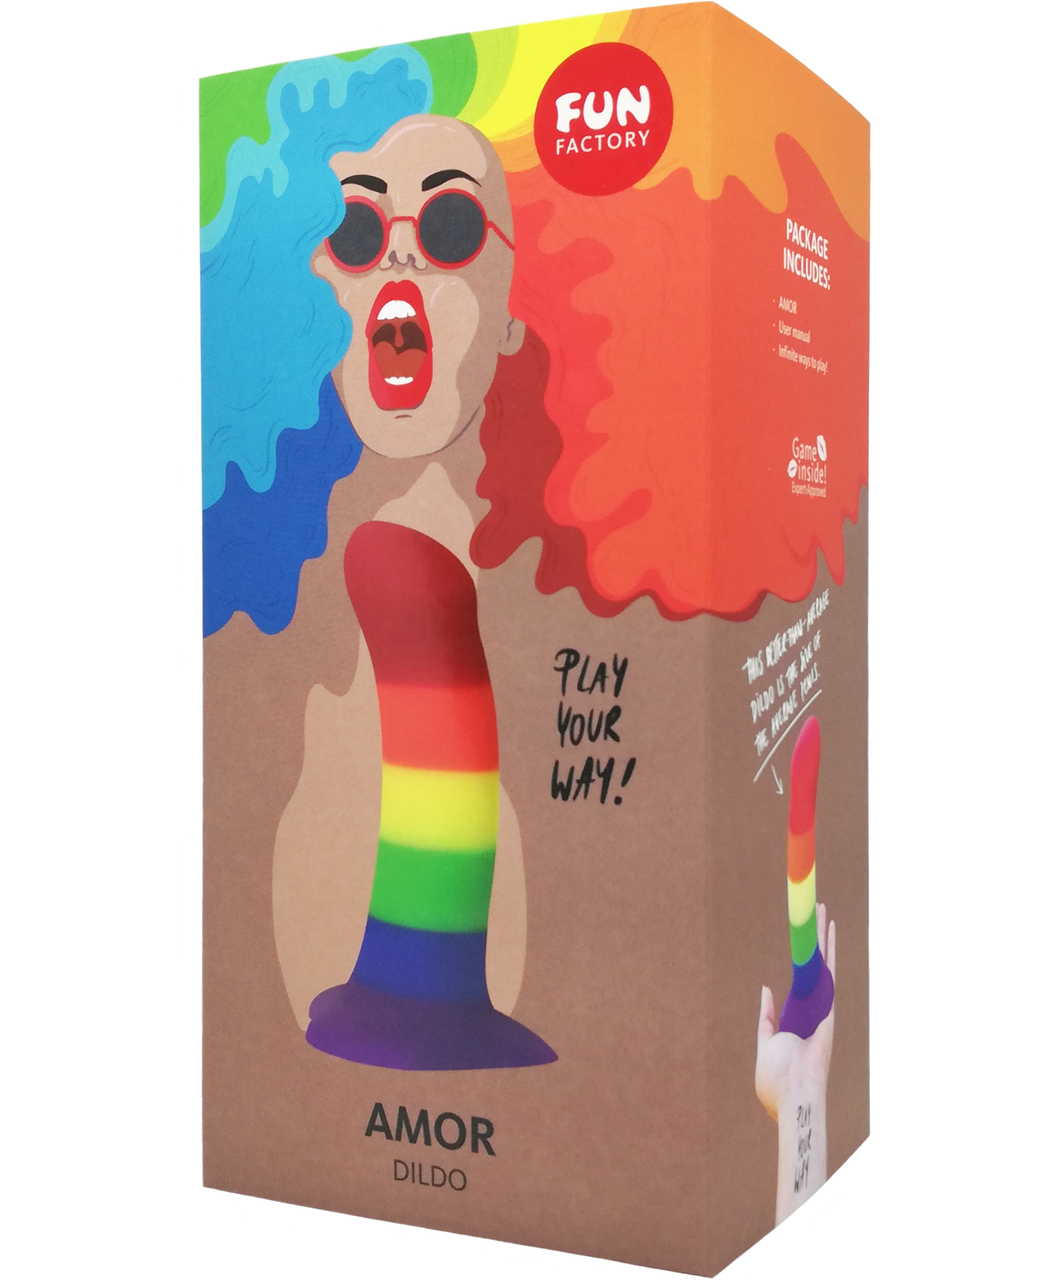 Fun Factory Amor Rainbow Pride Edition silicone dildo